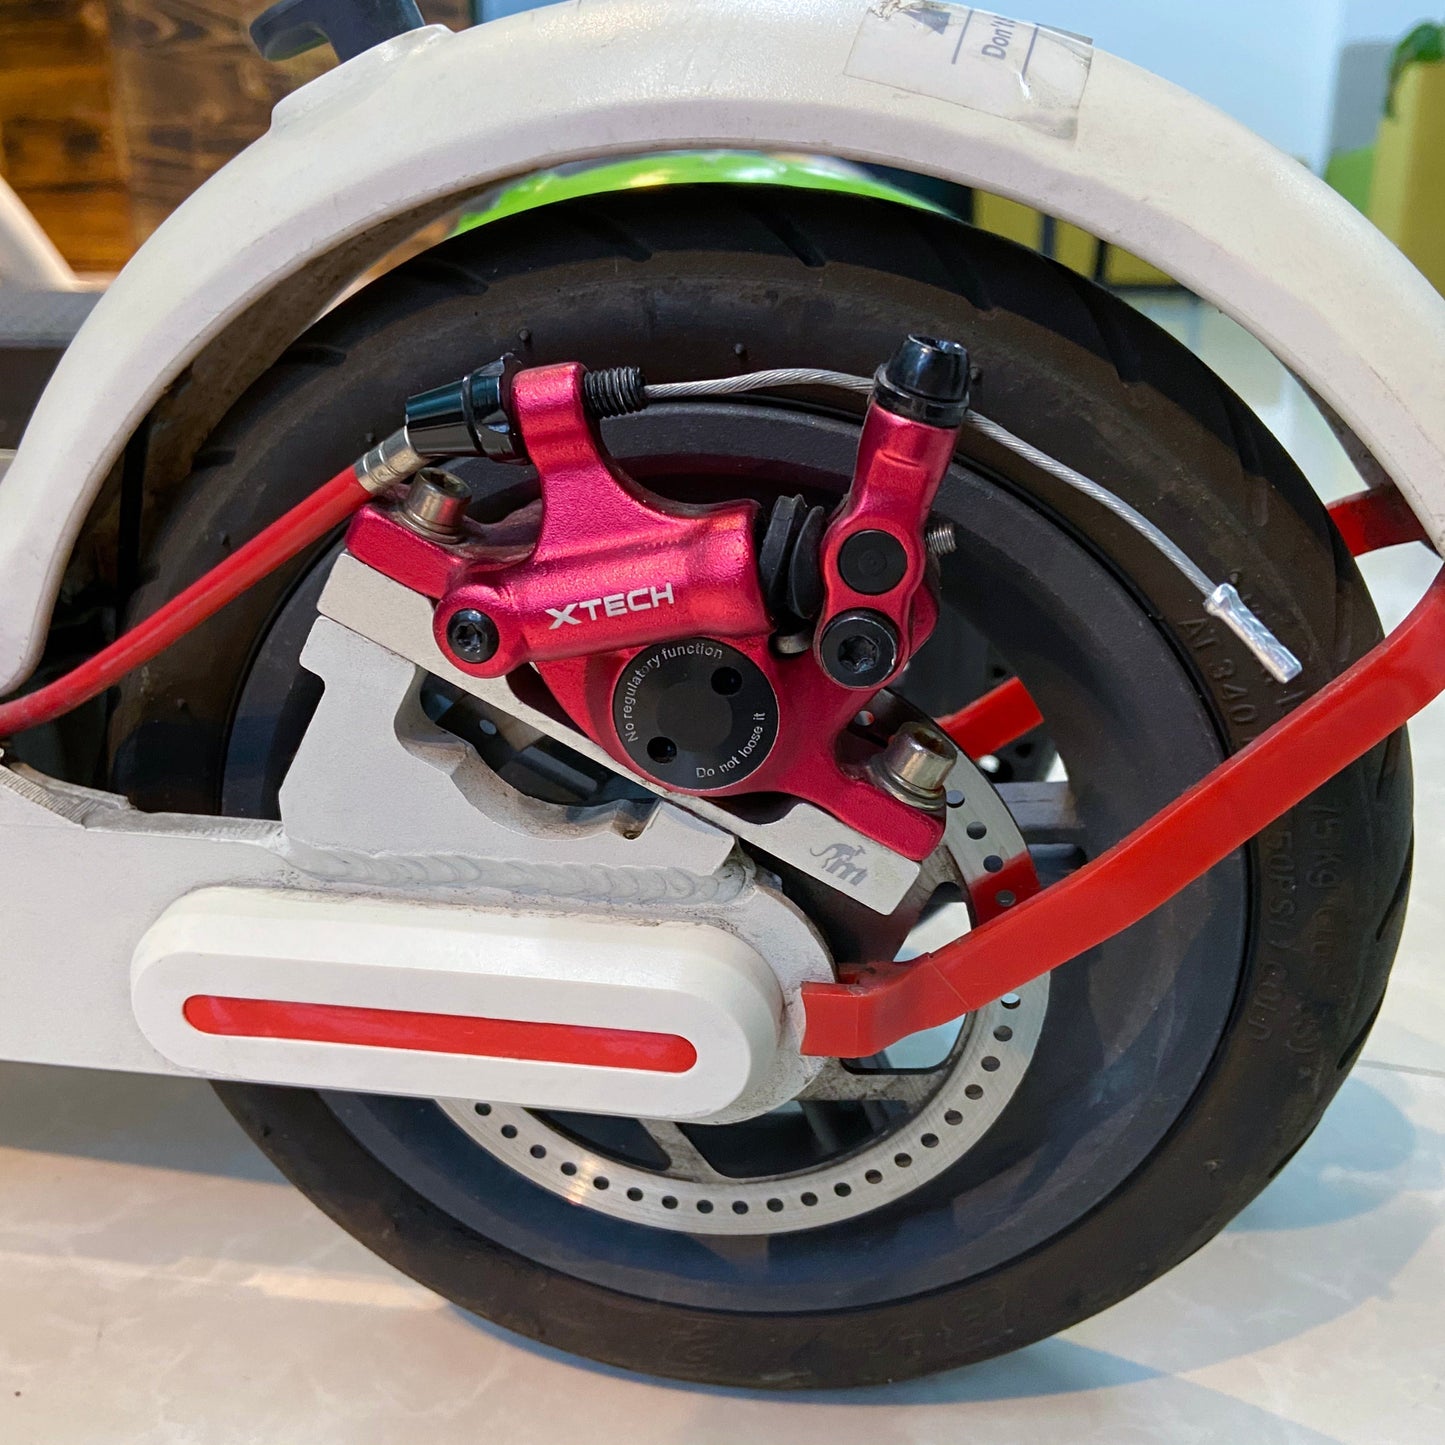 Monorim Xtech Disc Brake Upgrade Kit For Hiboy ks4 pro Scooter Brake Construction With 120mm Disk